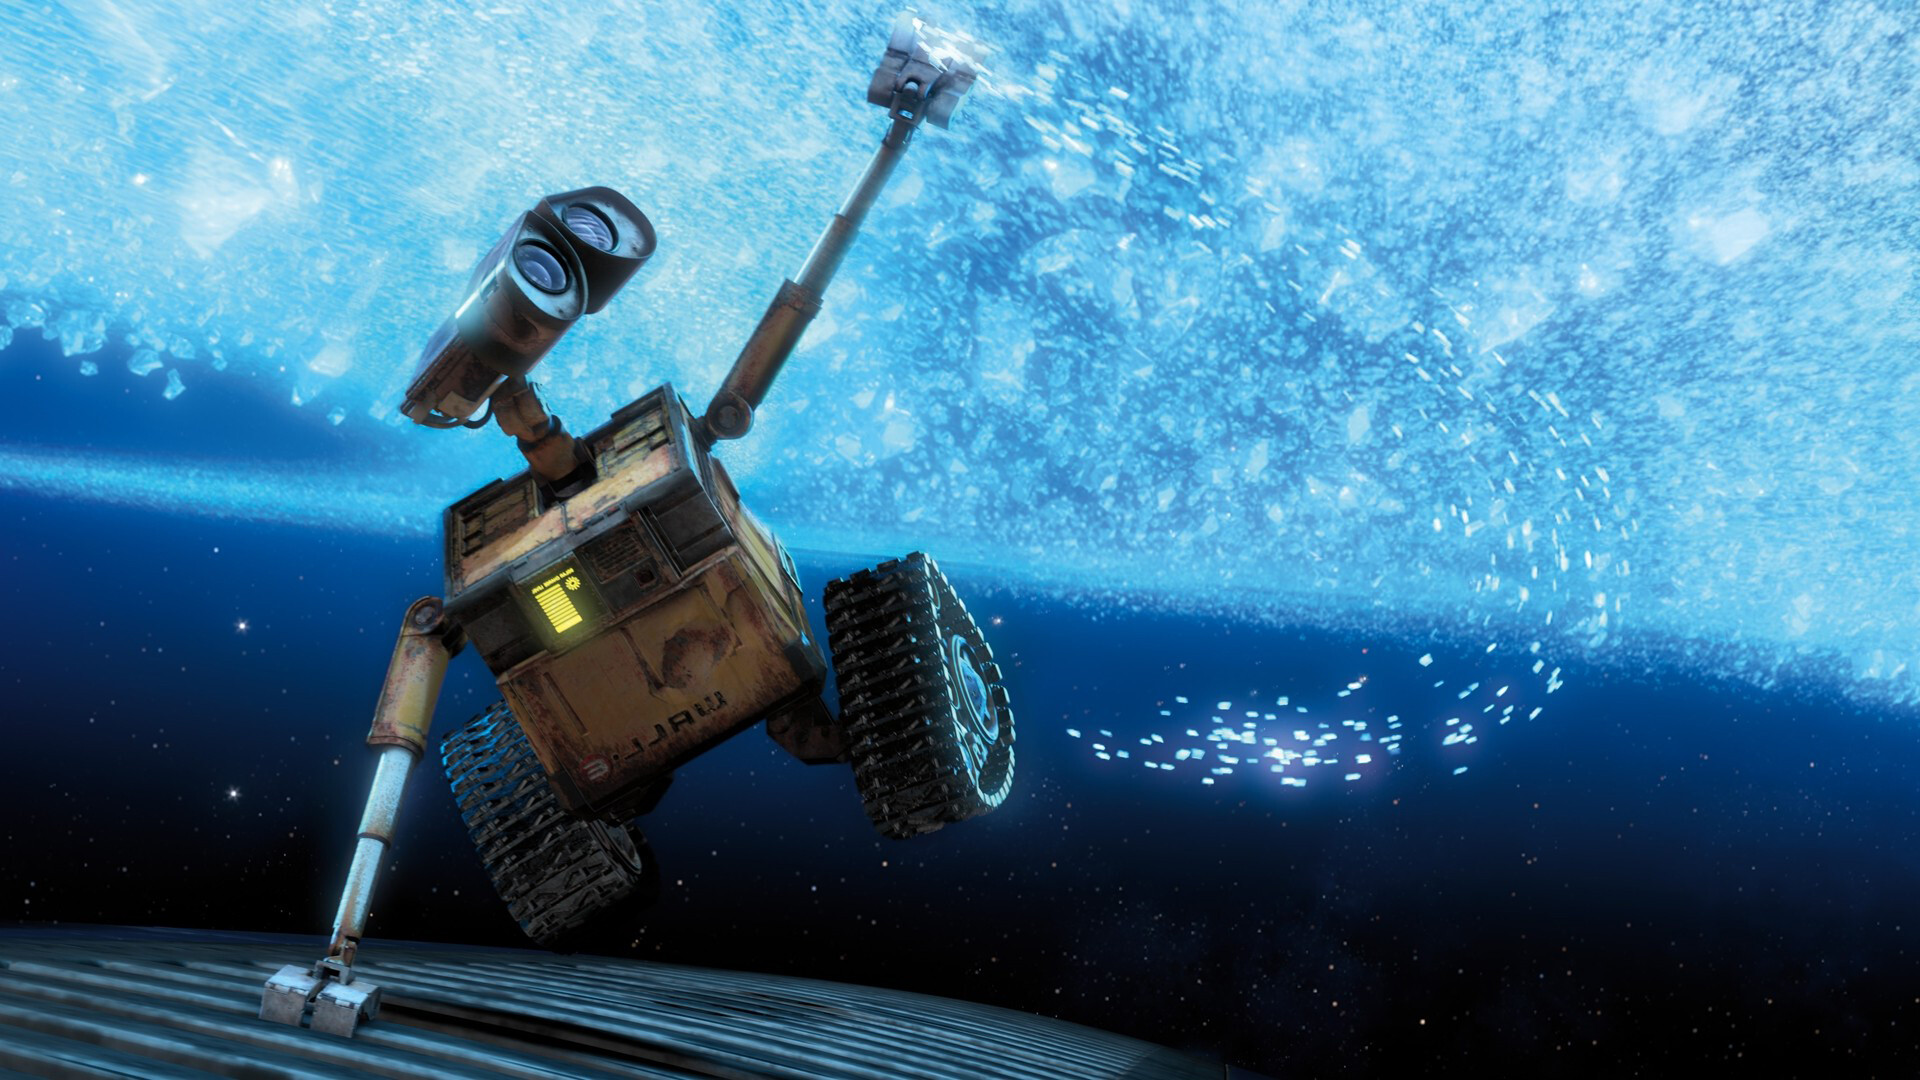 WALL·E: Pixar’s 2008 sci-fi love-story animated film classic. 1920x1080 Full HD Wallpaper.